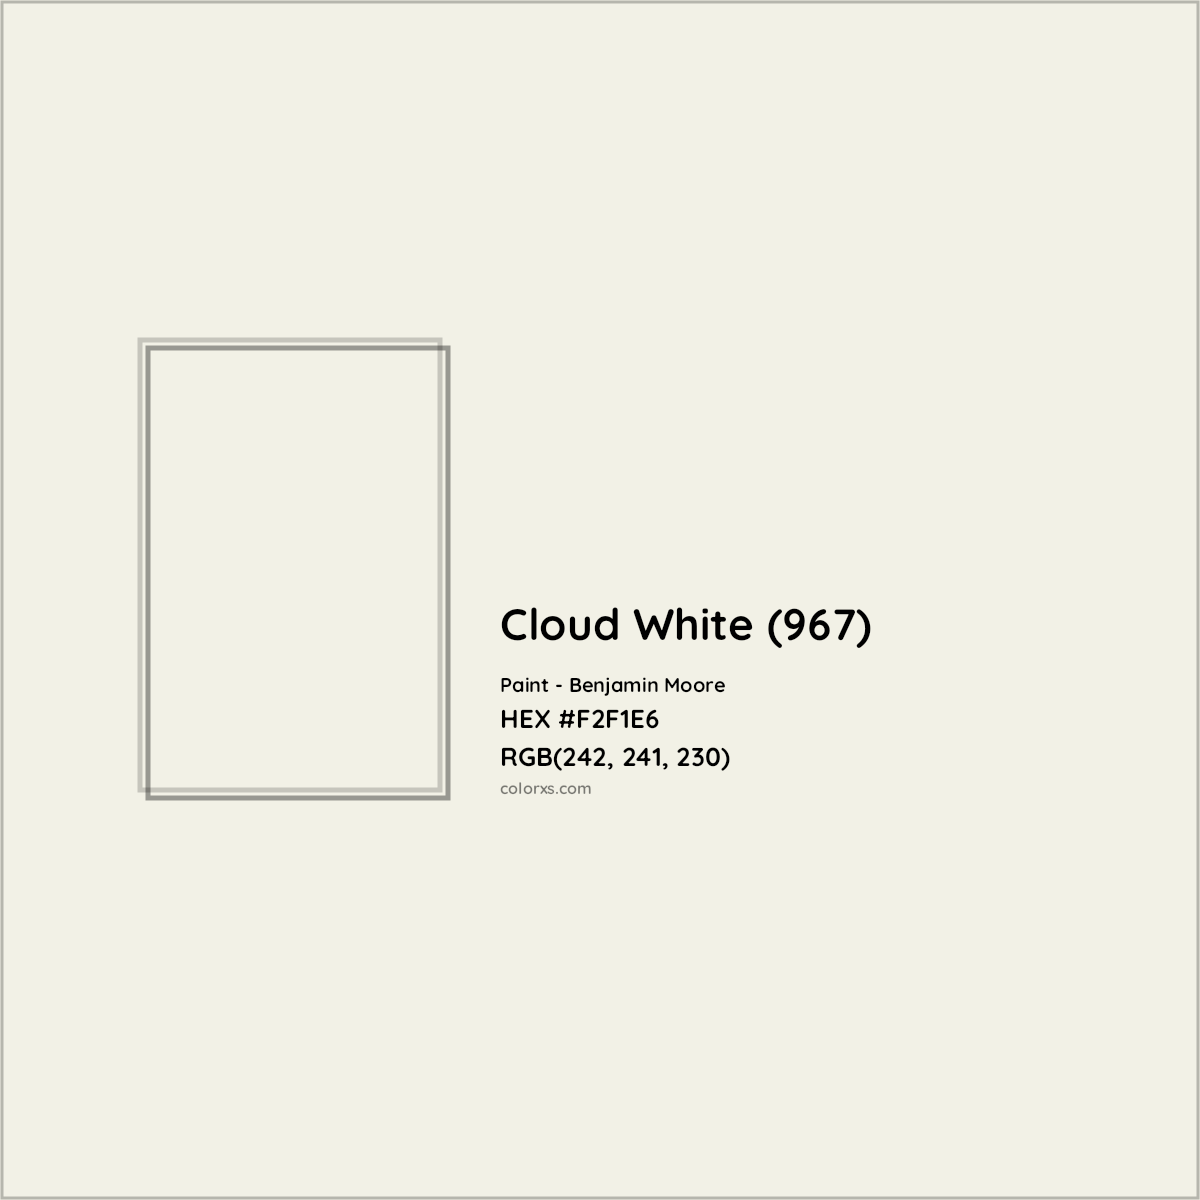 HEX #F2F1E6 Cloud White (967) Paint Benjamin Moore - Color Code